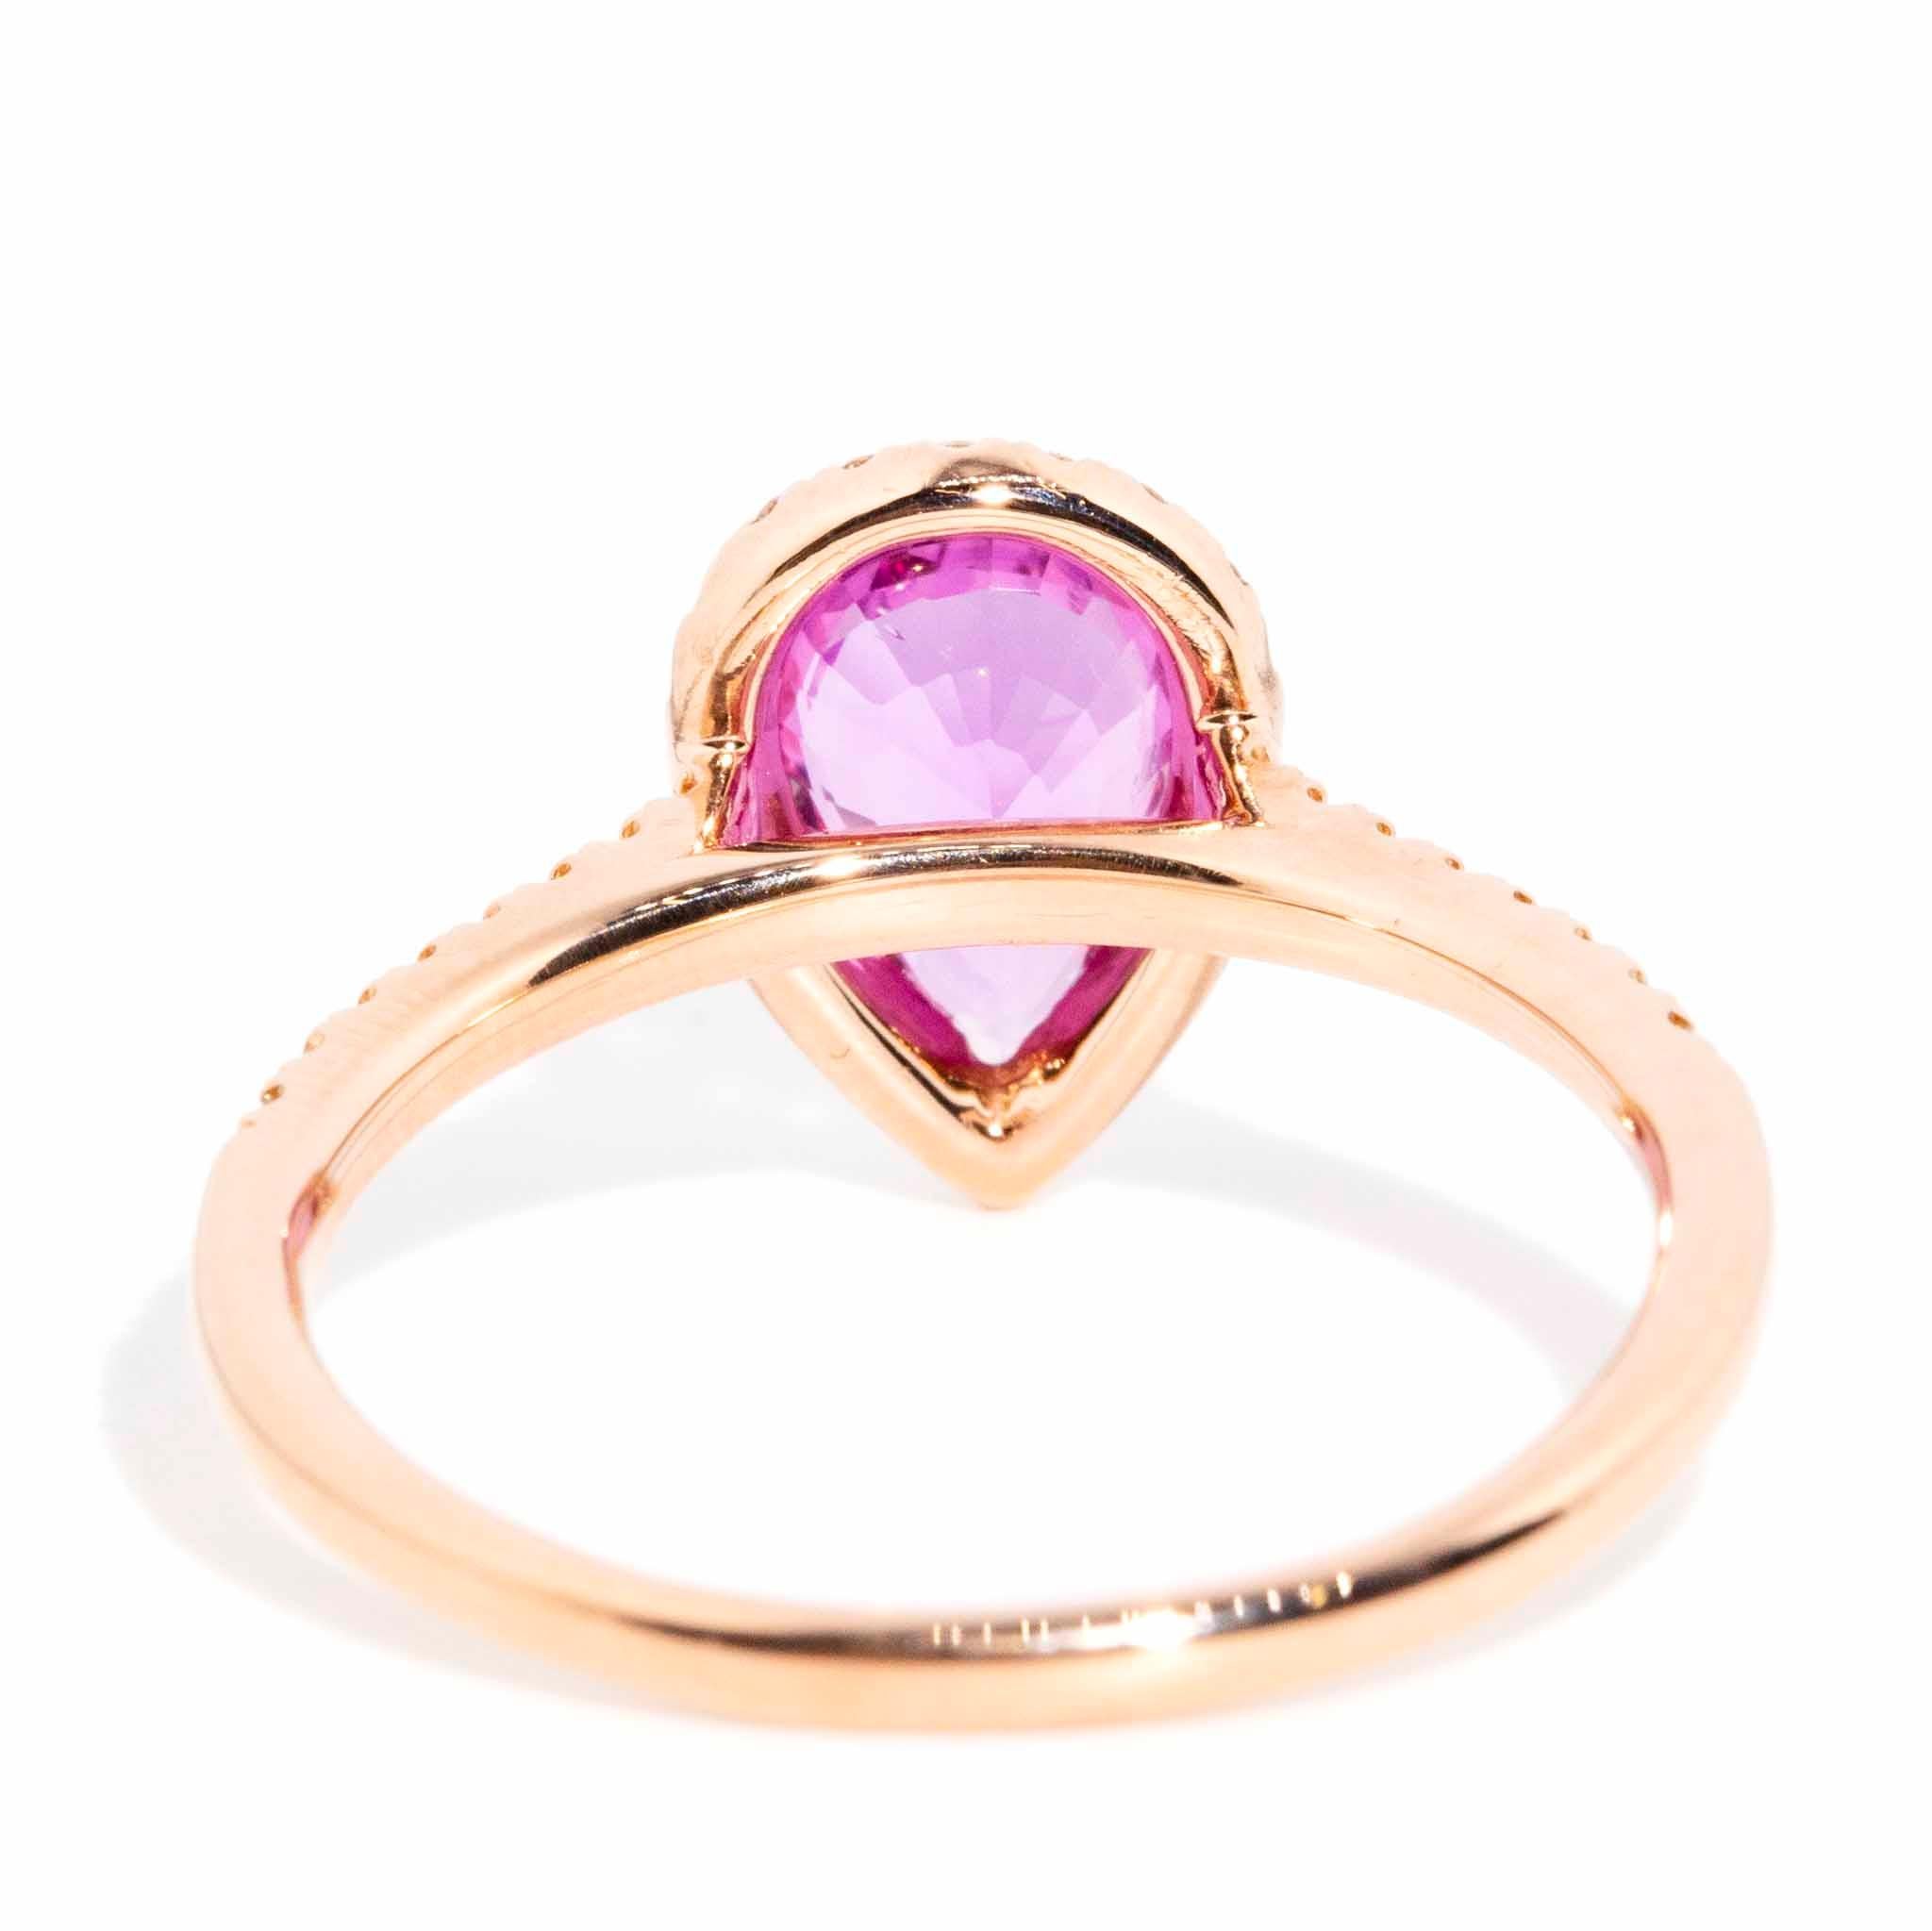 Wanda 1.21 Carat Purple Pink Pear Cut Sapphire & Diamond Ring 14 Carat Rose Gold For Sale 2